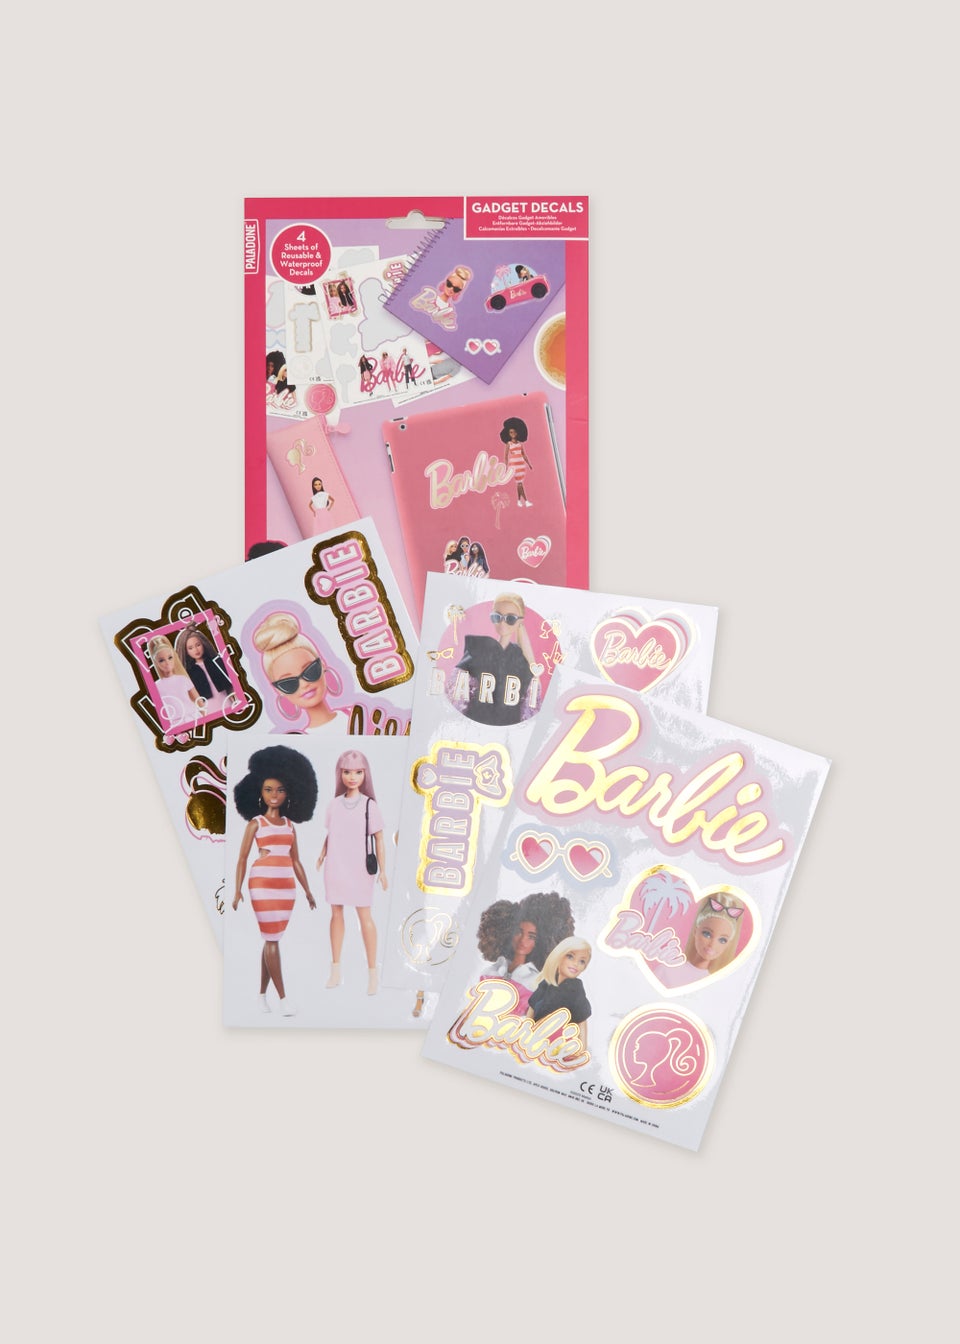 Kids Barbie Gadget Stickers